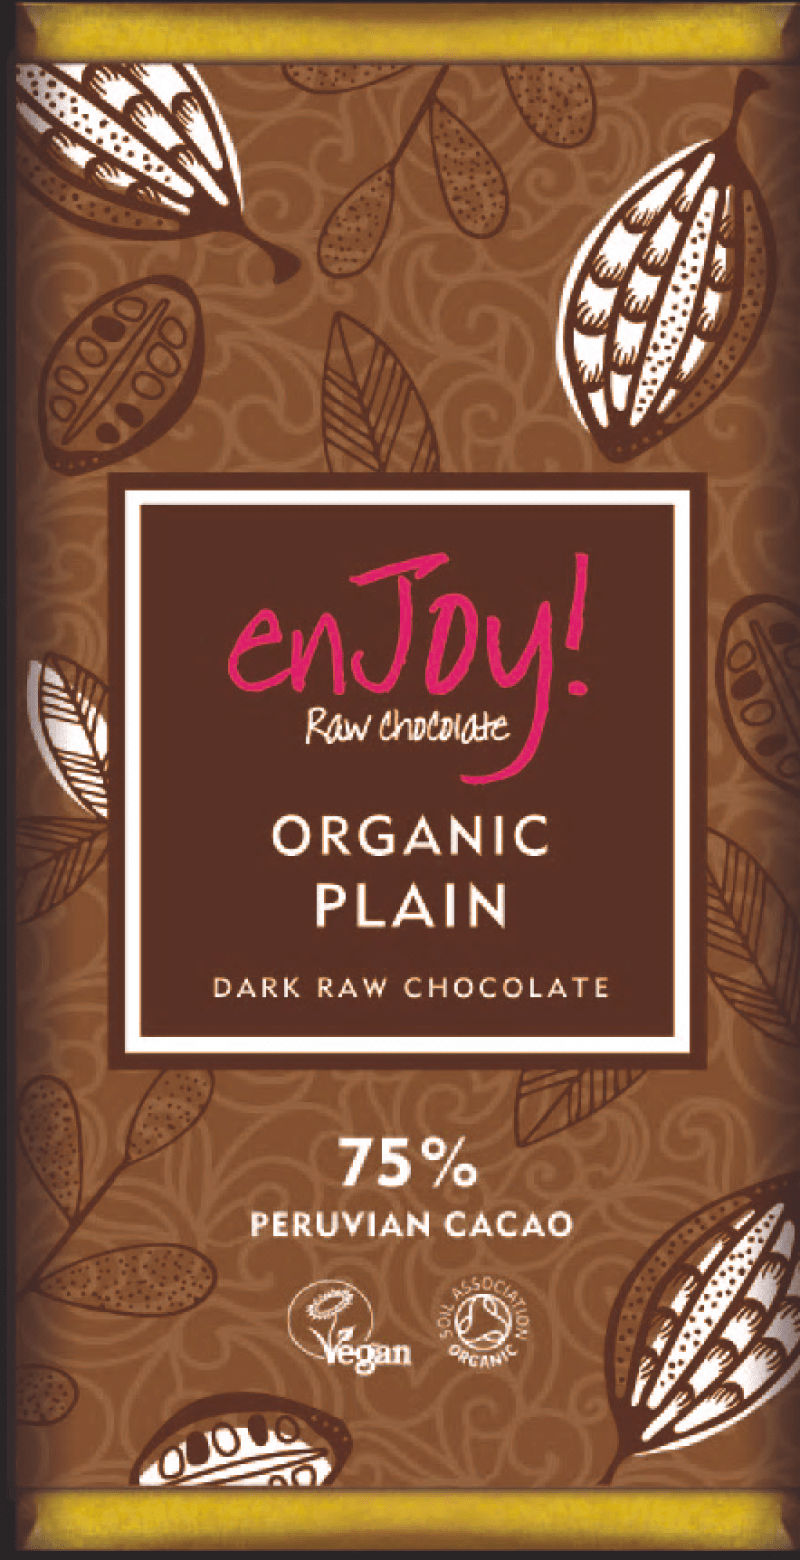 Enjoy! - Dark Raw Chocolate